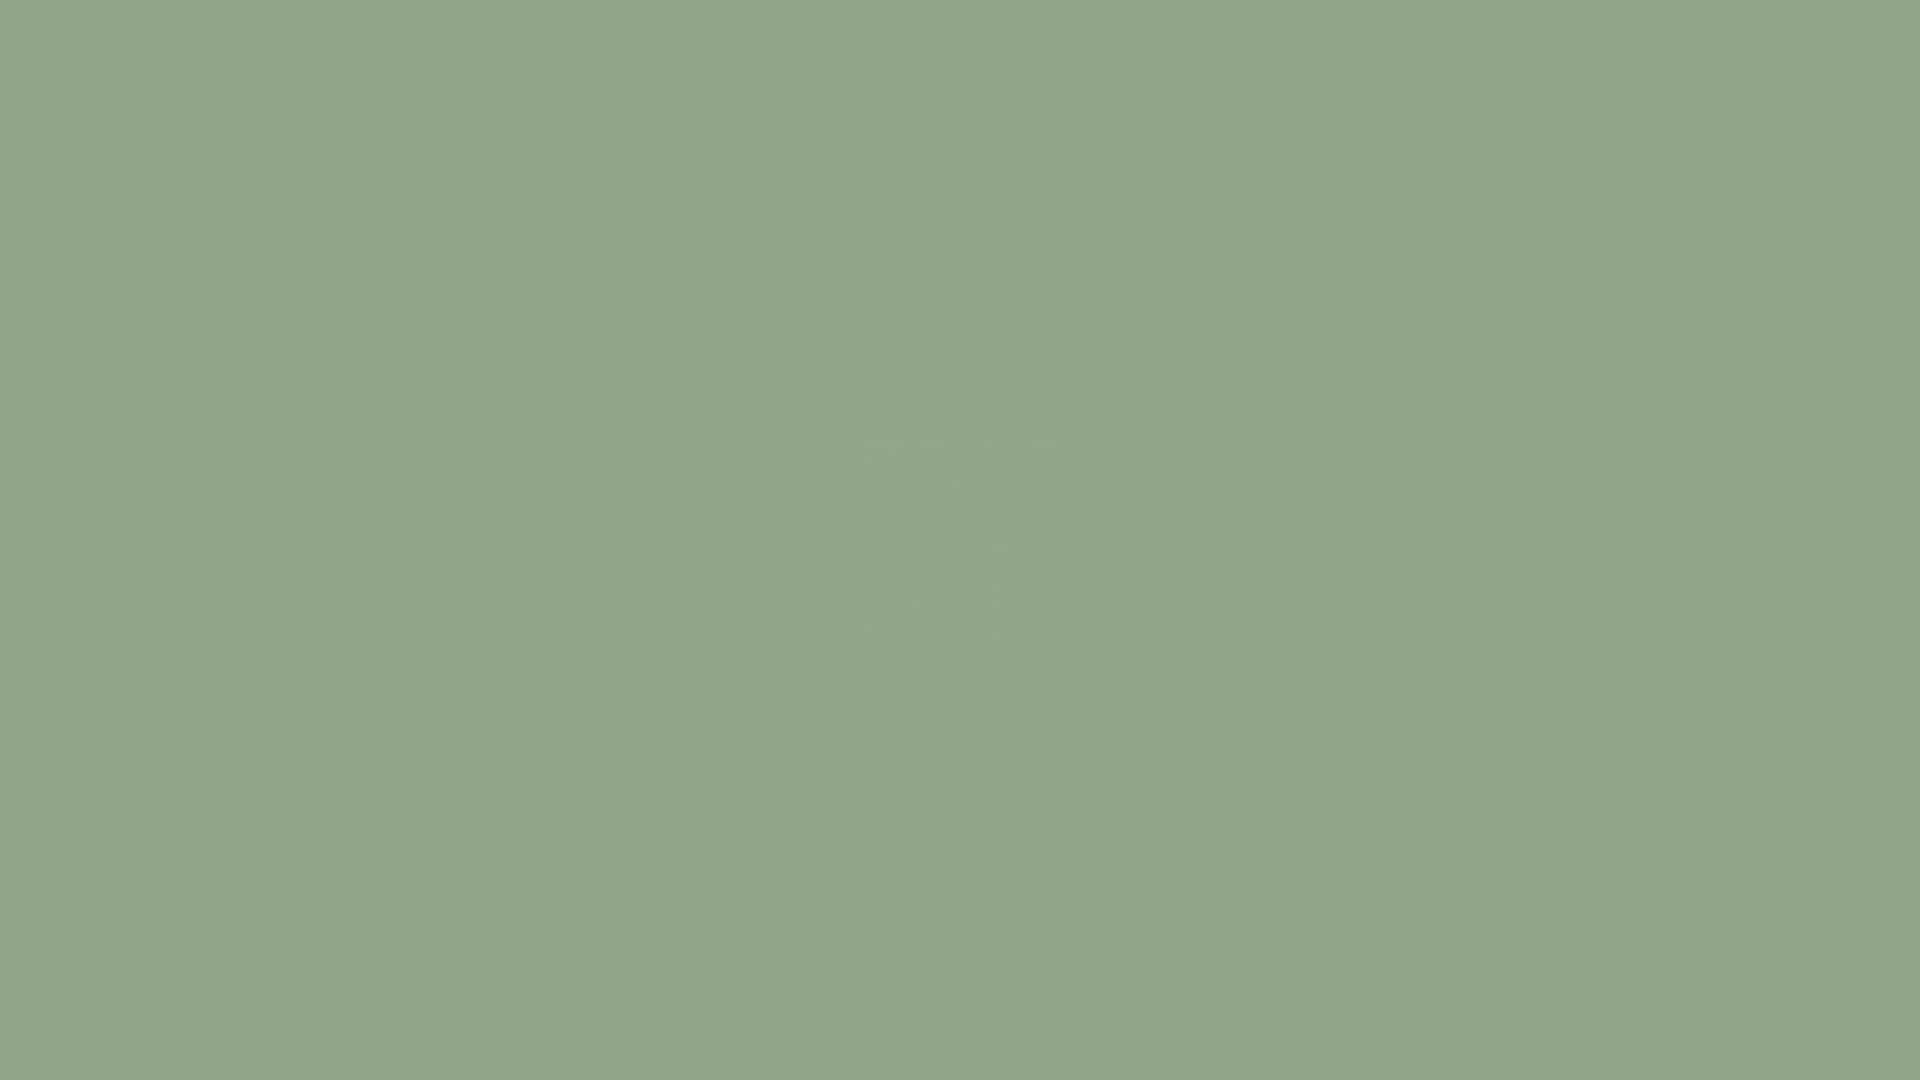 Sage Green Desktop Wallpapers - Top Những Hình Ảnh Đẹp